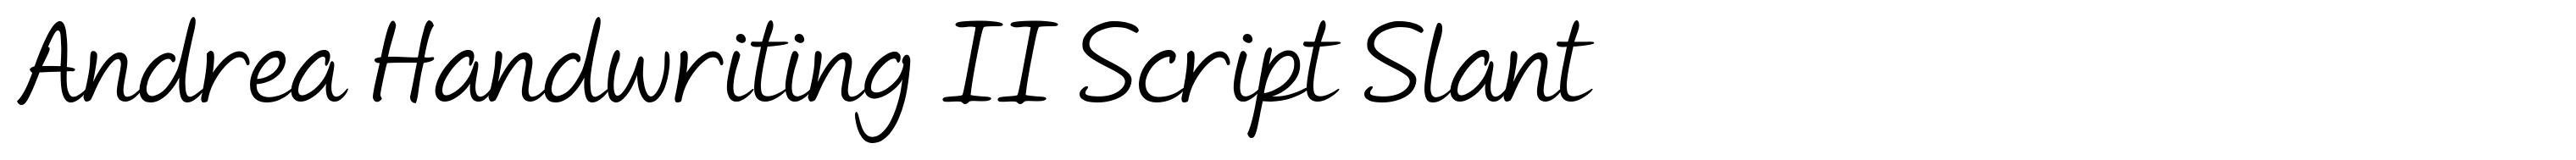 Andrea Handwriting II Script Slant